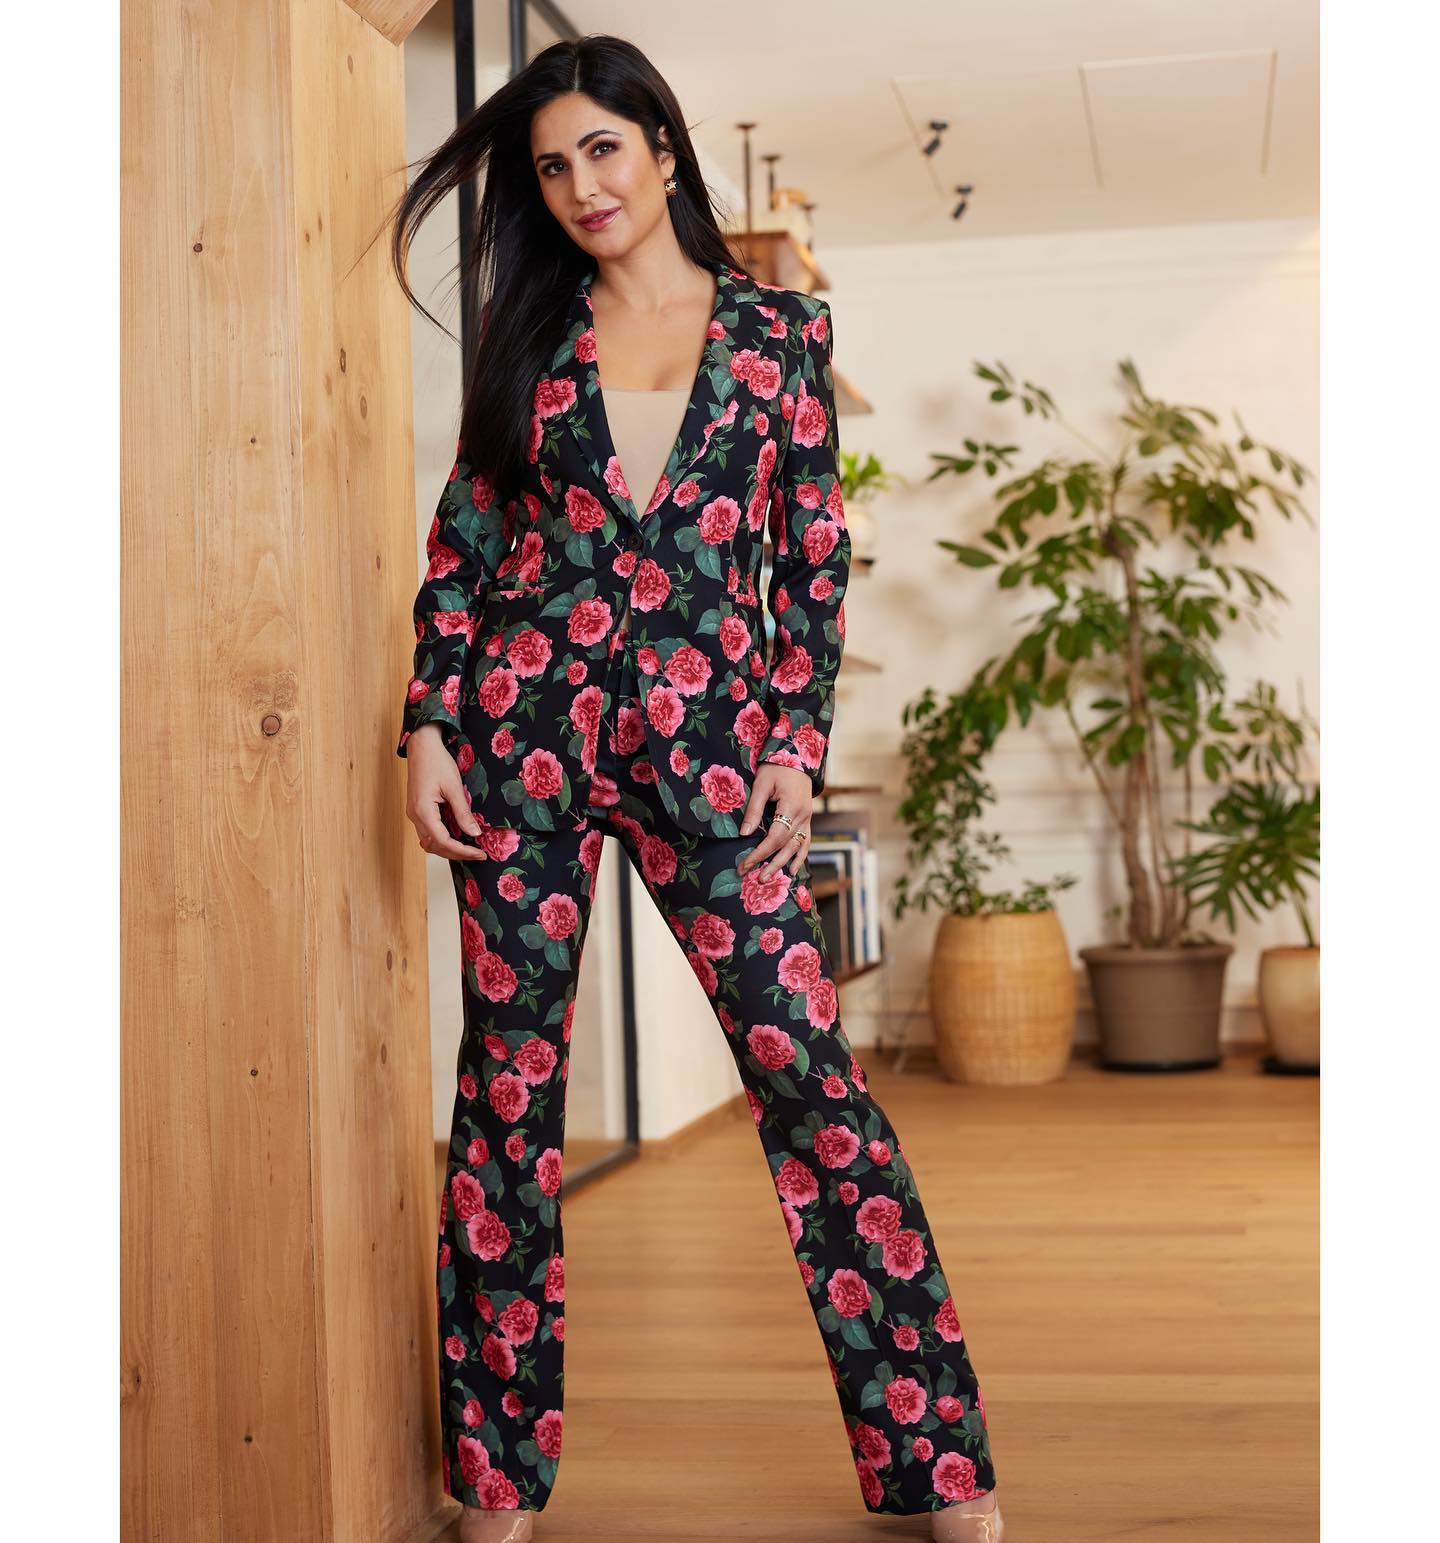 Katrina Kaif, Kriti Sanon and Priyanka Chopra: Showcased their stunning looks in floral pant suits 8756